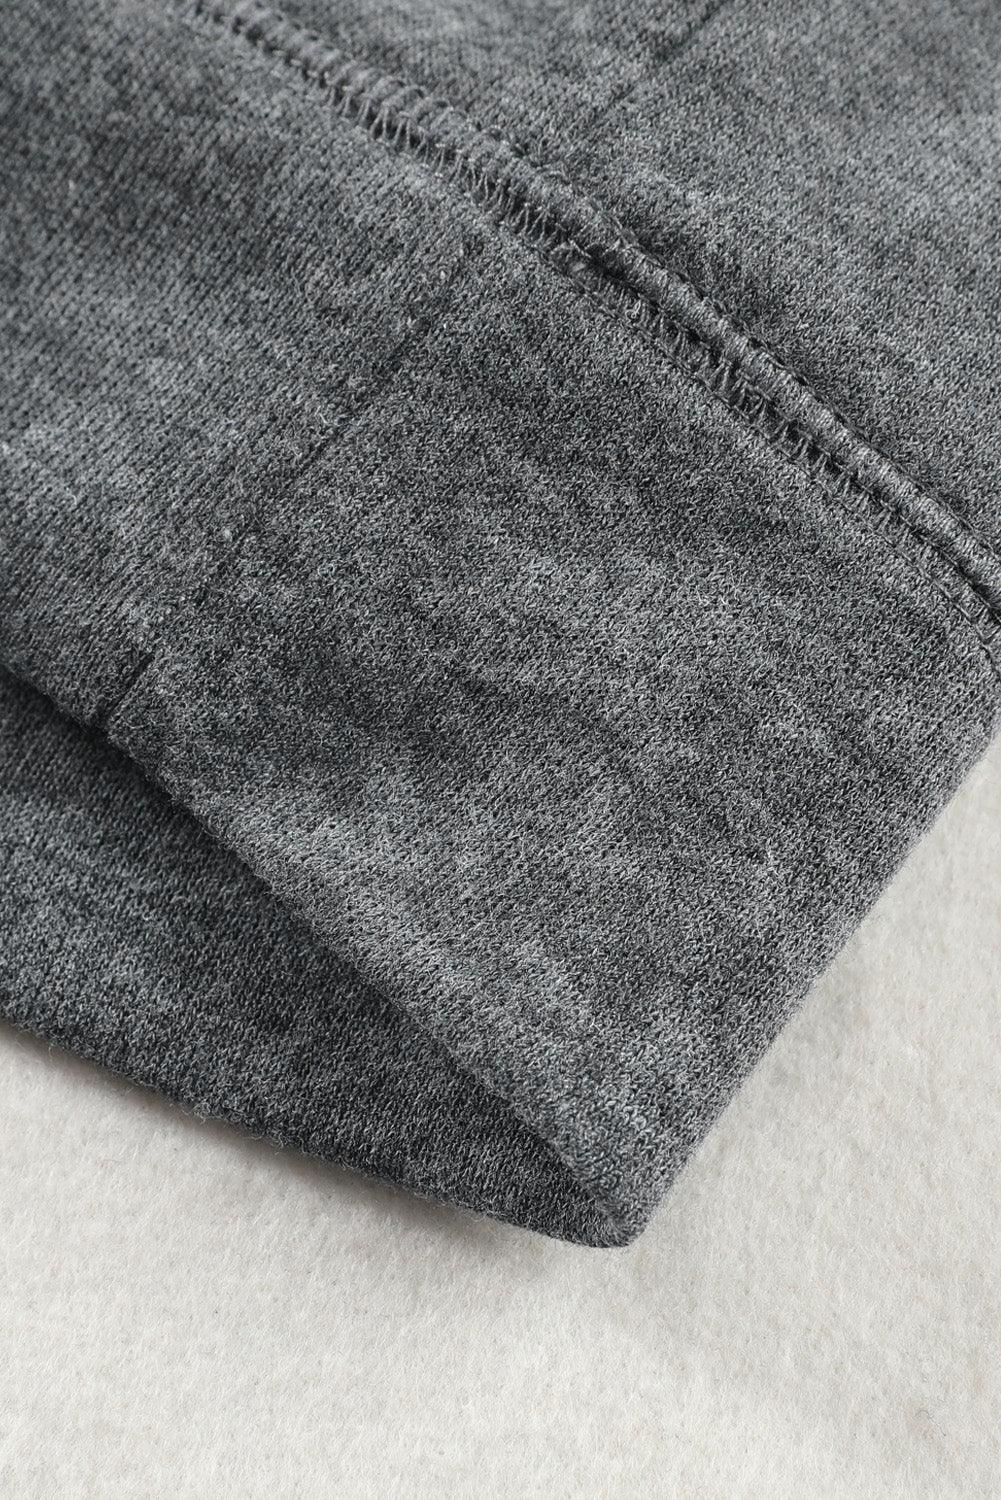 Gray Mineral Wash Kangaroo Pocket Drawstring Pullover Hoodie - L & M Kee, LLC